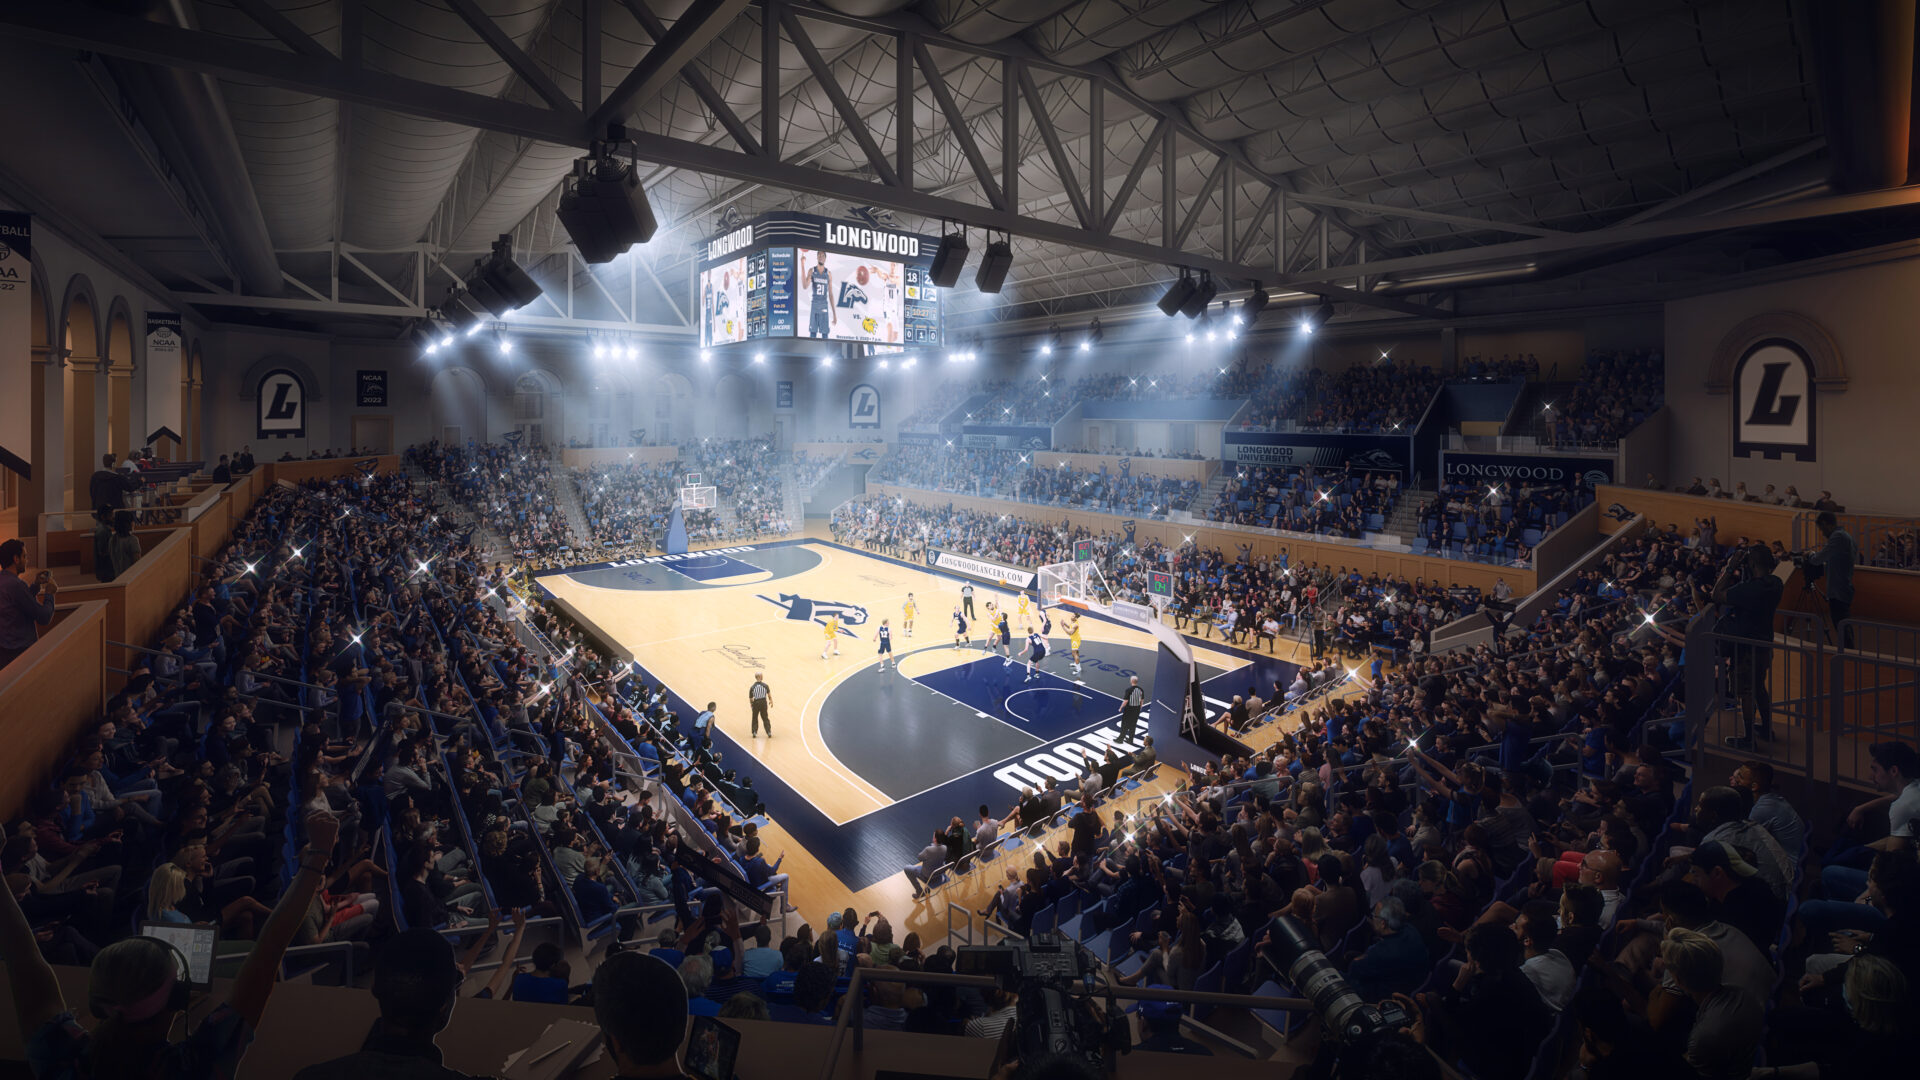 Basketball Court, Concert Venue